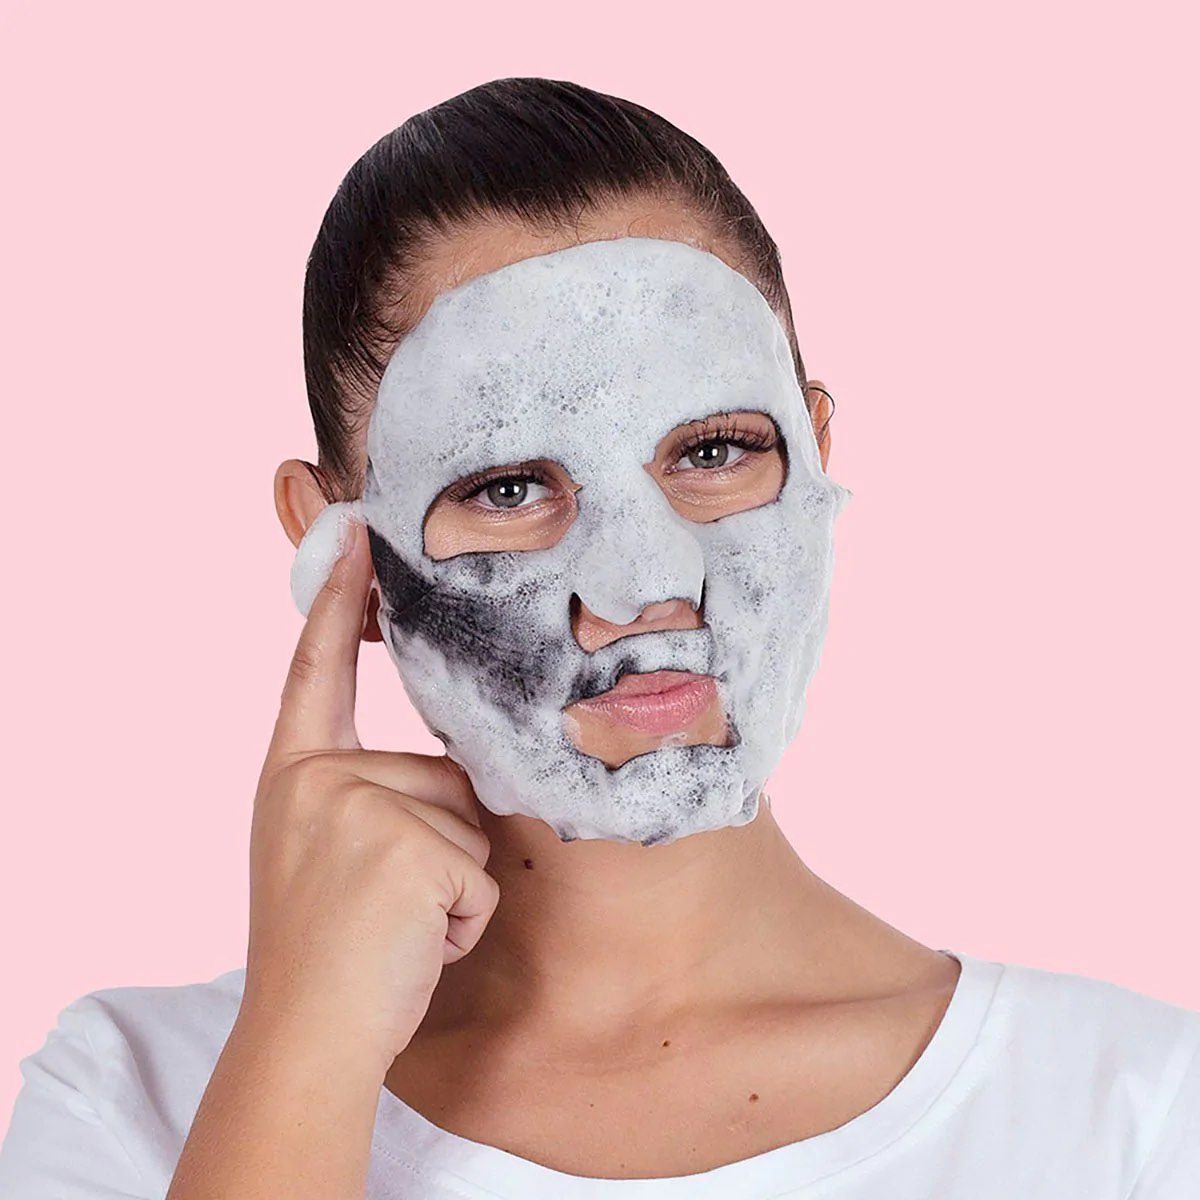 Bubble Purifying + Charcoal Biodegradable Sheet Mask